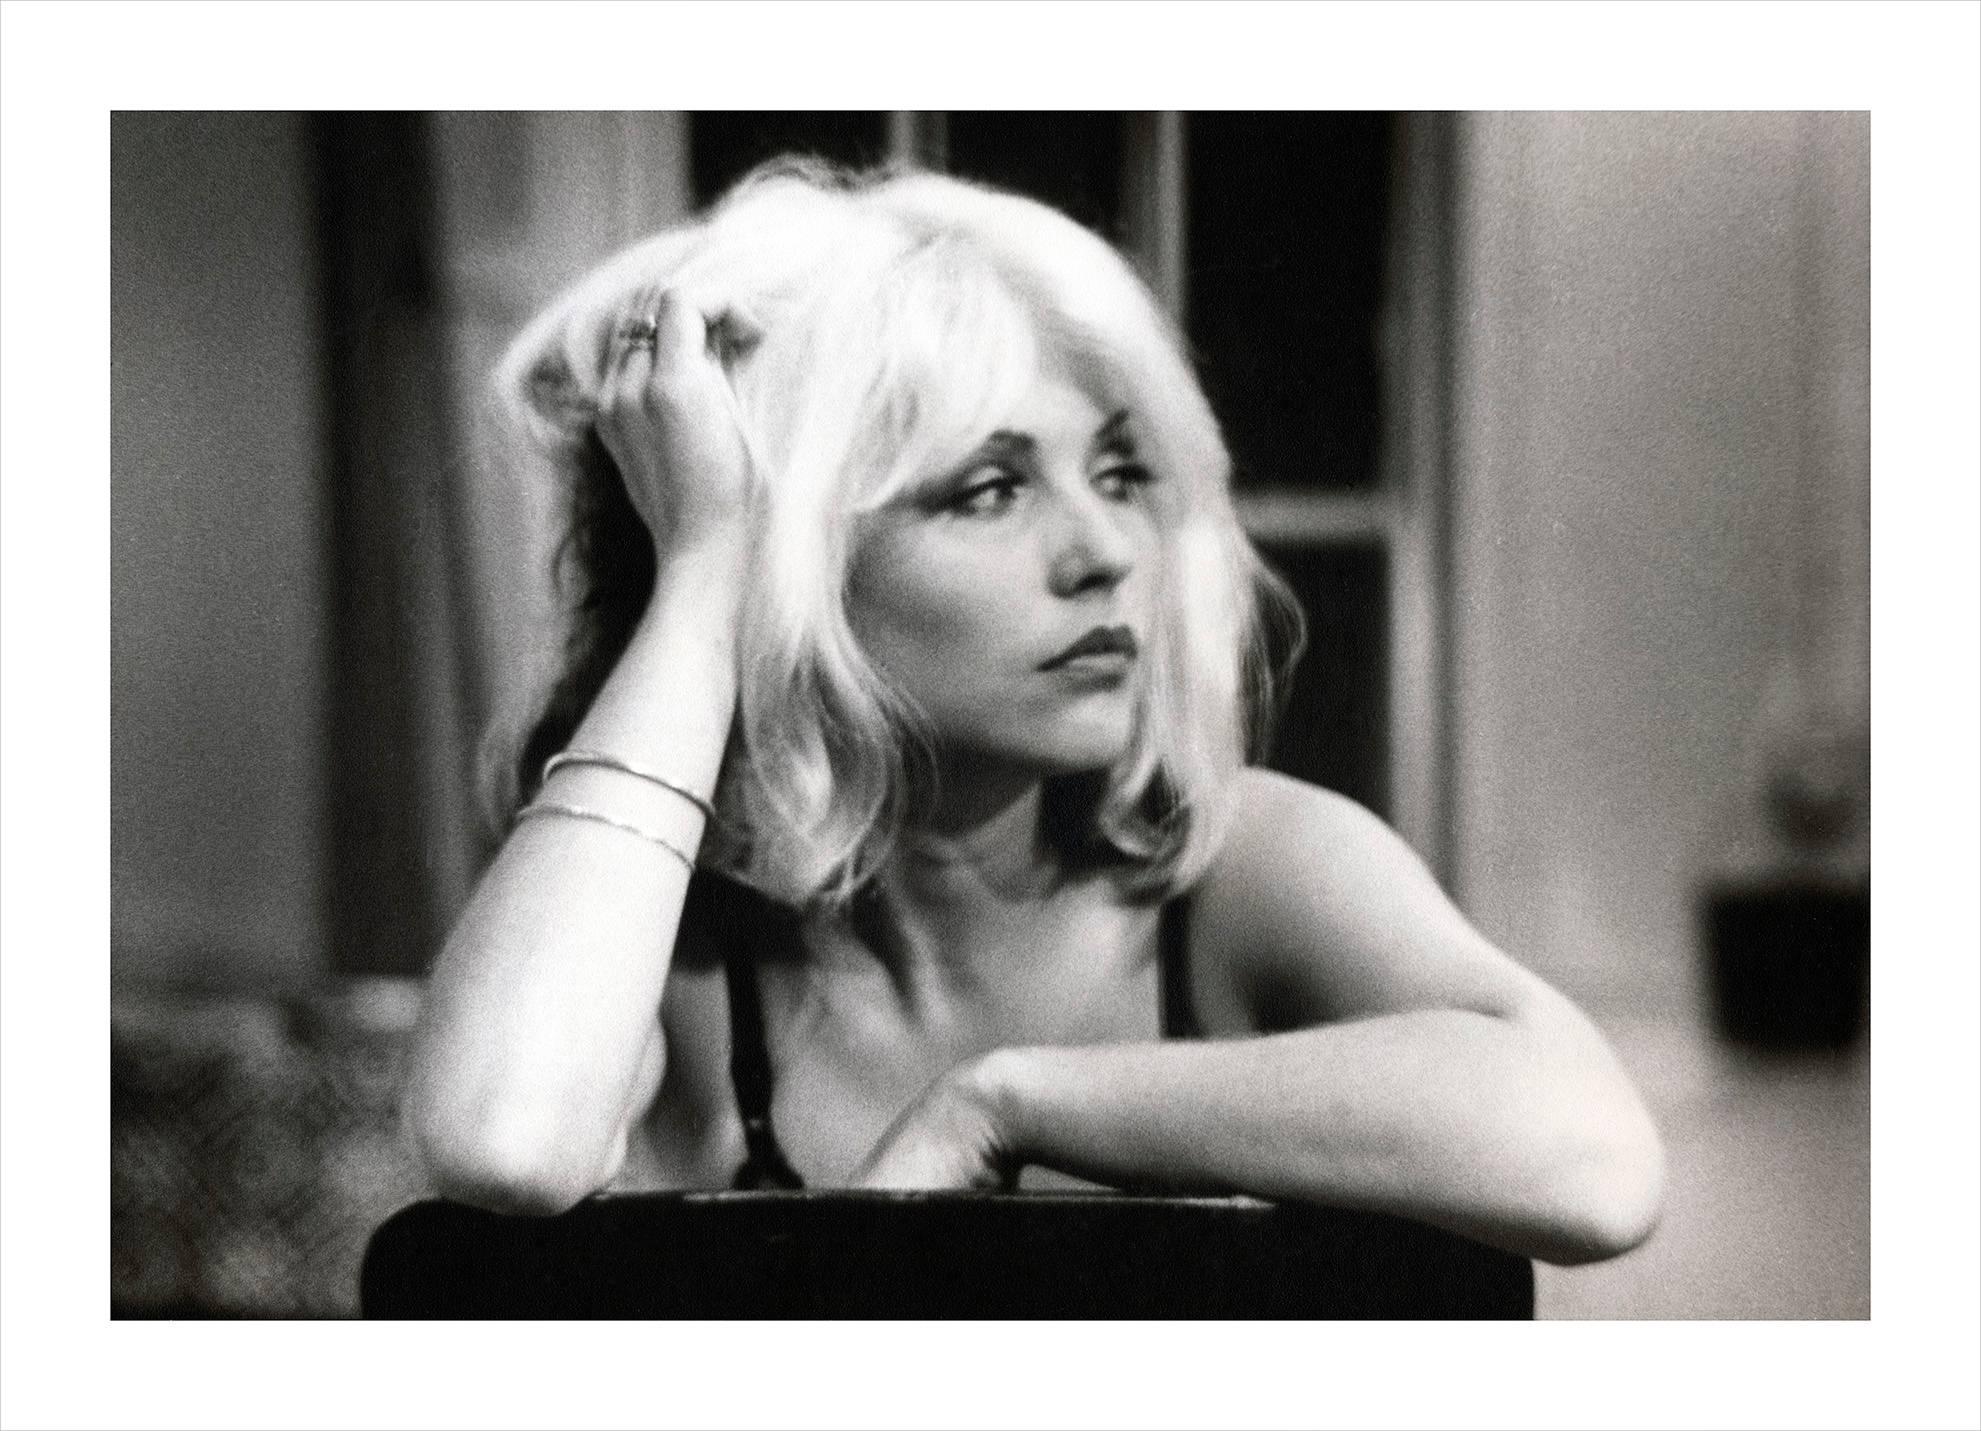 Fernando Natalici Portrait Photograph - Debbie Harry (on the set of Unmade Beds), New York, 1976